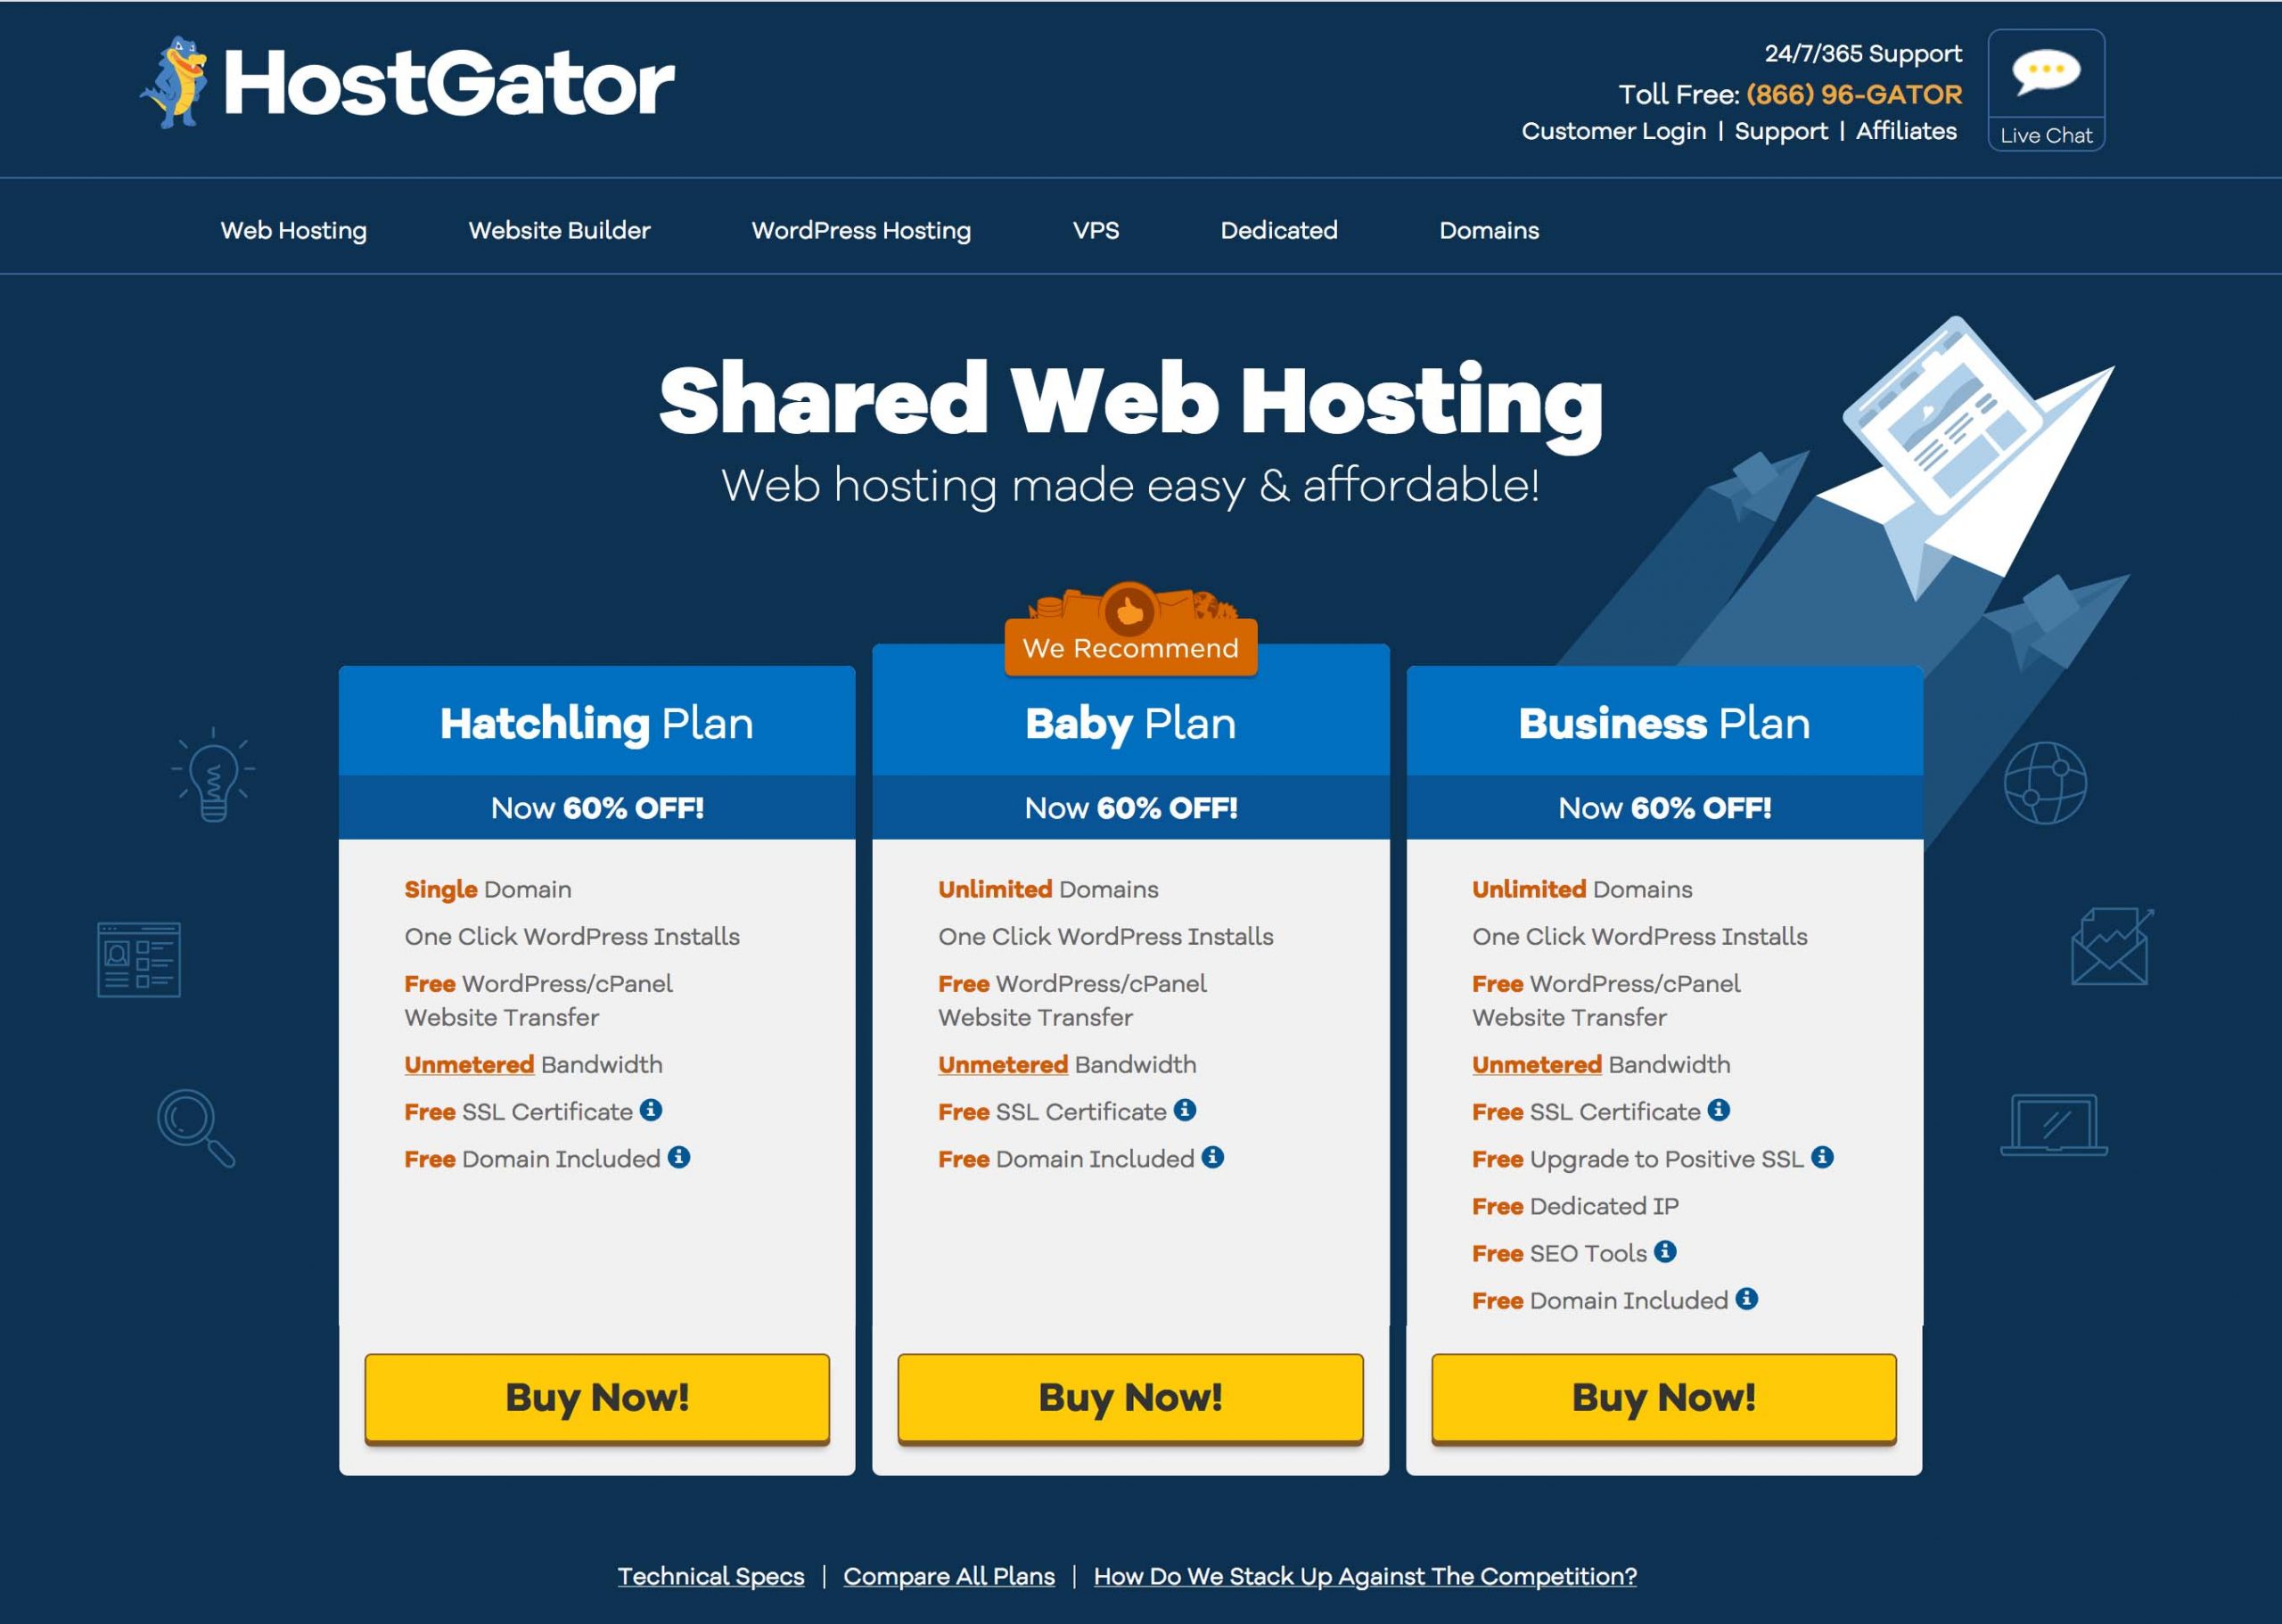 HostGator offers 3 affordable hosting plans for web hosting and domain names.